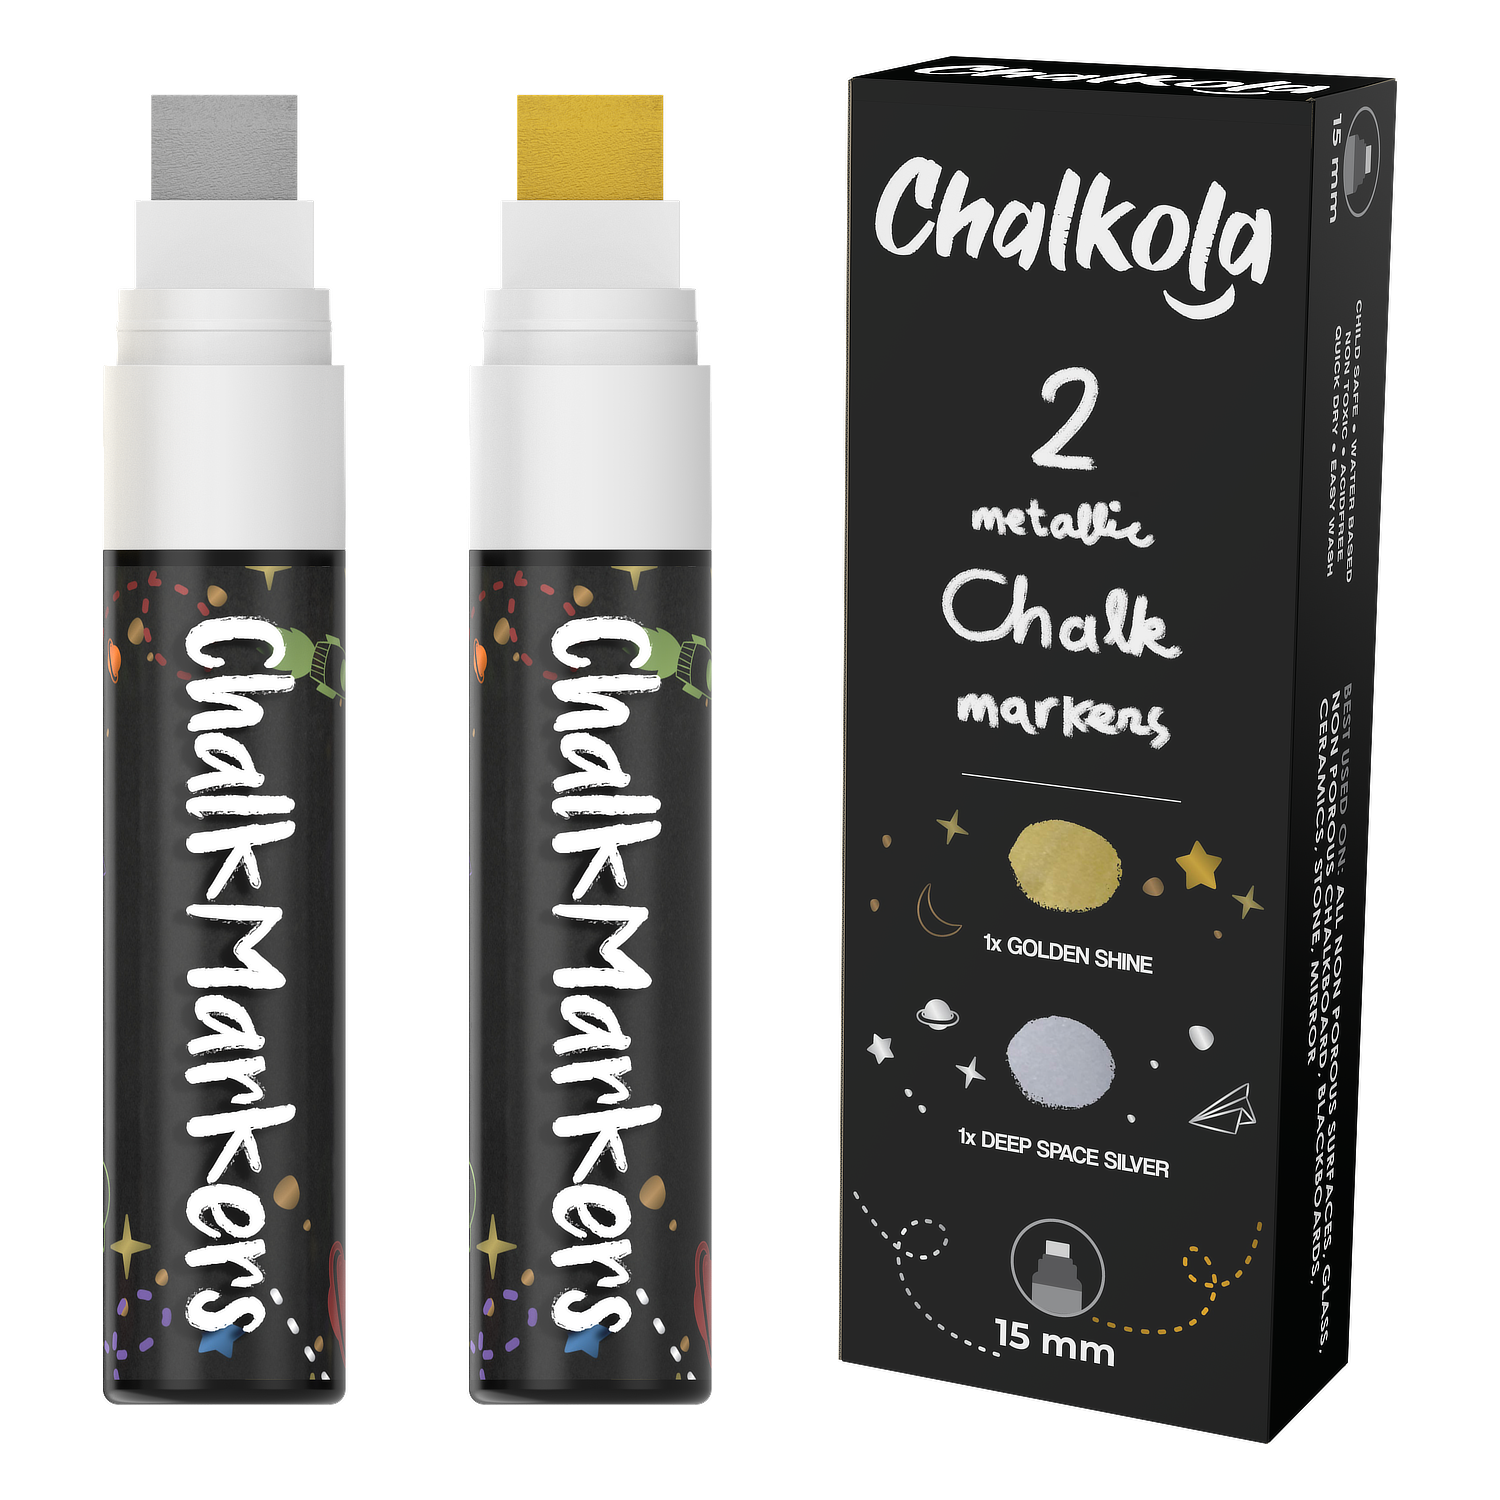 Chalkola chk_5_yellow_markers 5 Yellow Chalkboard Chalk Markers - Yellow  Dry Erase Markers For Blackboard, Chalkboard Signs, Windows, Glass Variety  Pack - Fin